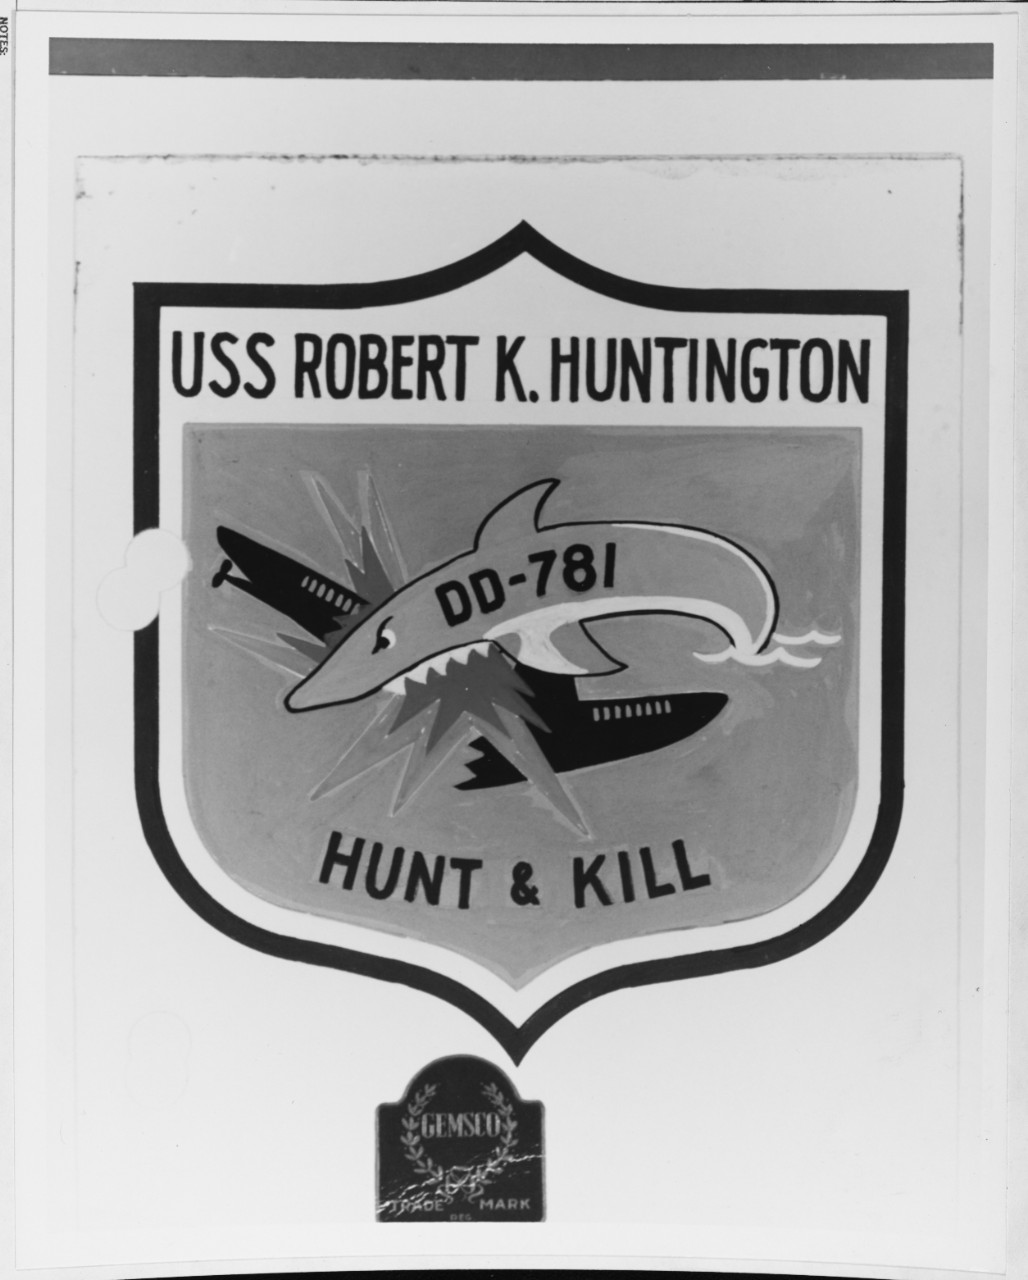 Insignia:  USS ROBERT K. HUNTINGTON (DD-781)